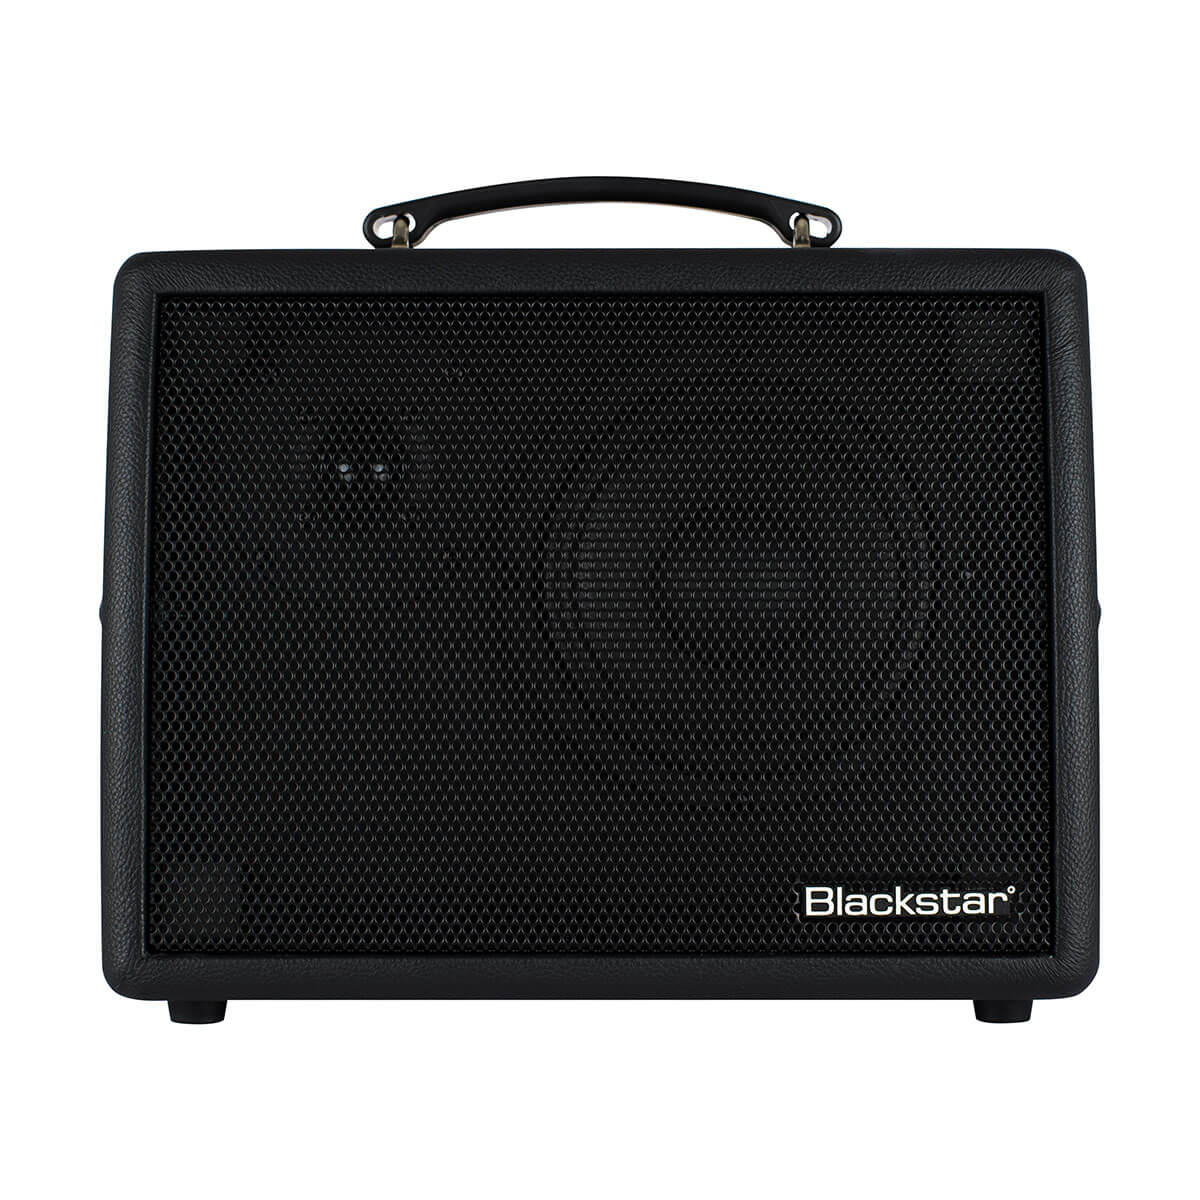 Blackstar Sonnet 60 watt Acoustic Amp - Black, View 1